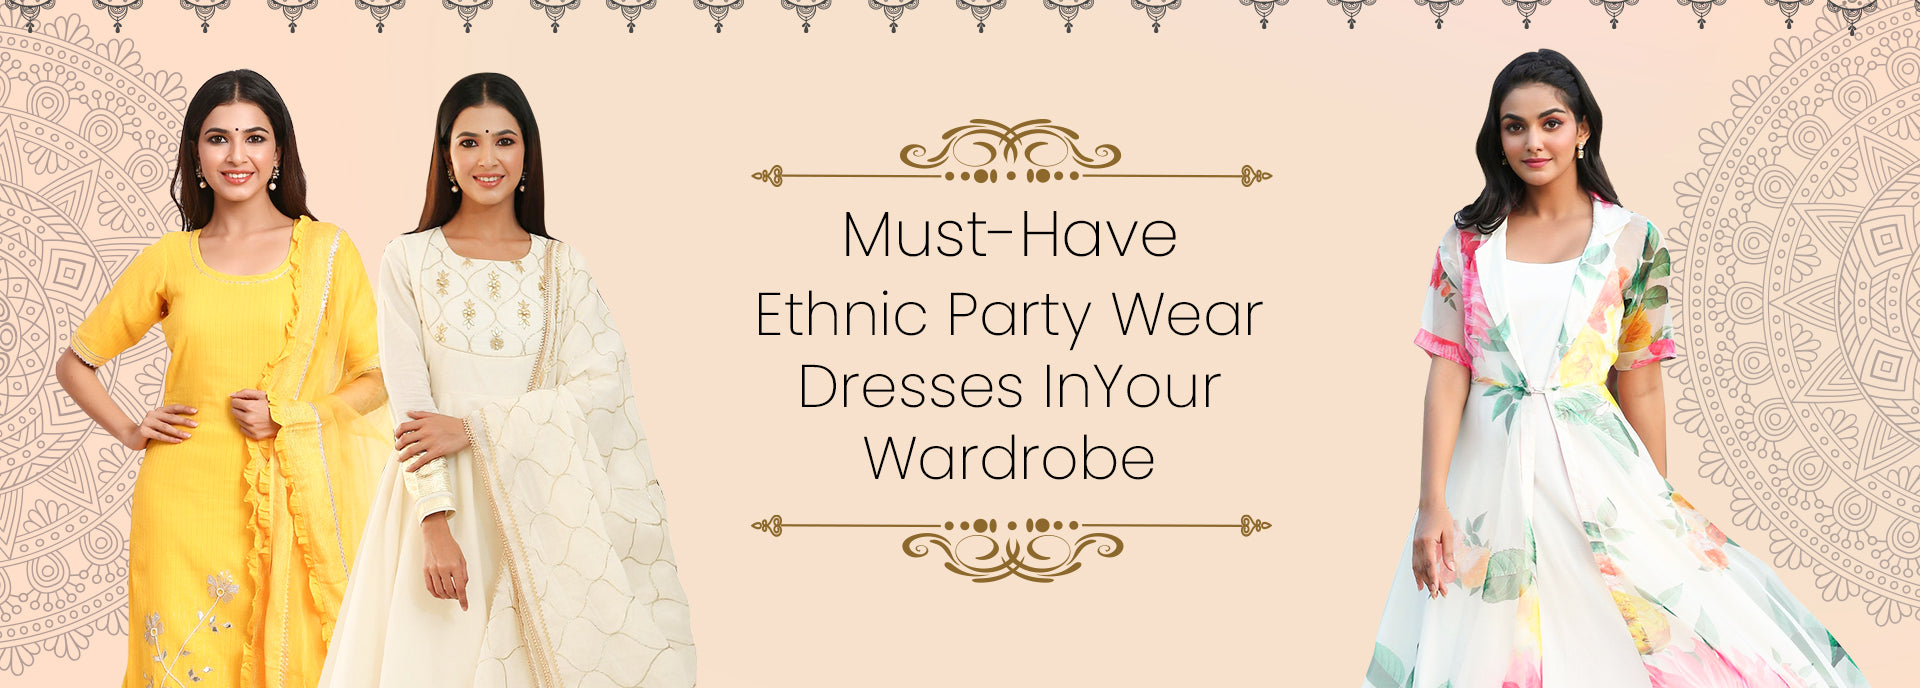 Ethnic Dresses For Women & Girls Indian Designer Bollywood Fashion Clothing  Suit | eBay